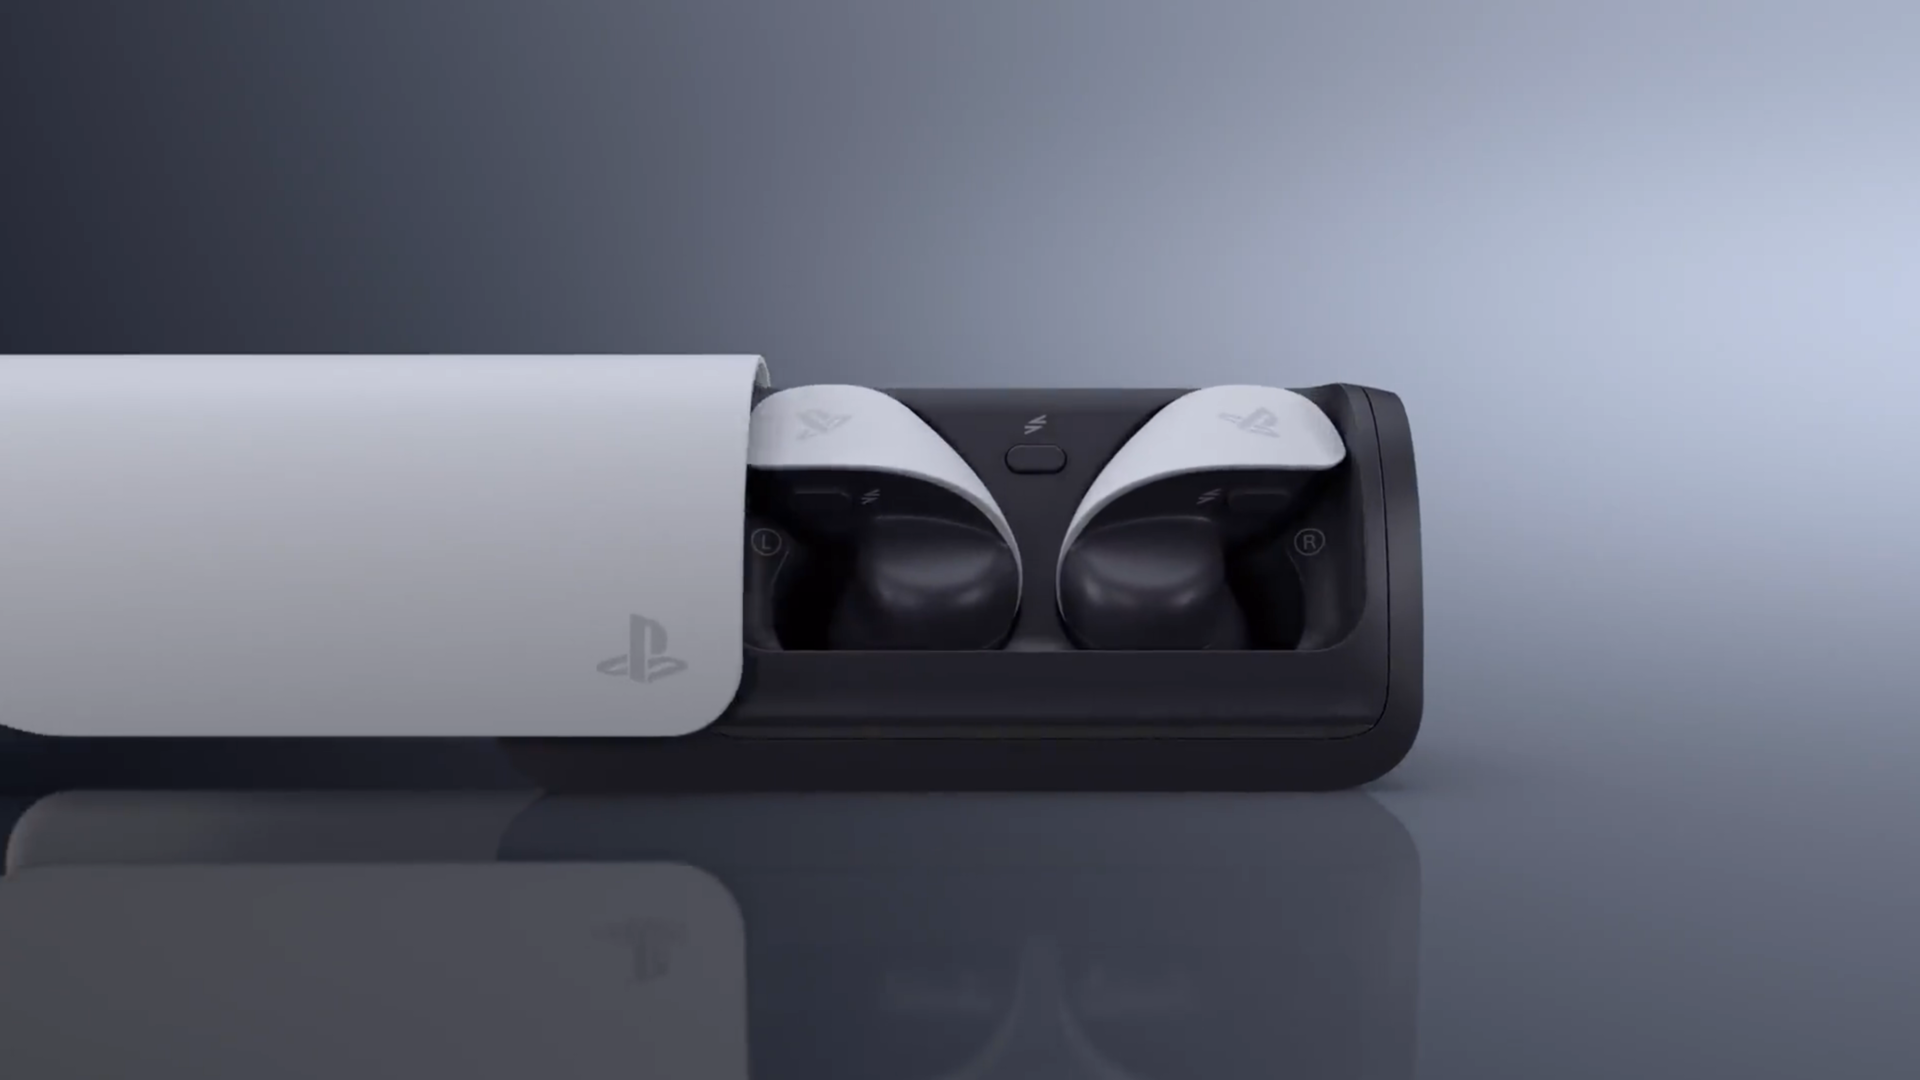 Zuby_Tech on X: PlayStation 5 Generation PlayStation Showcases